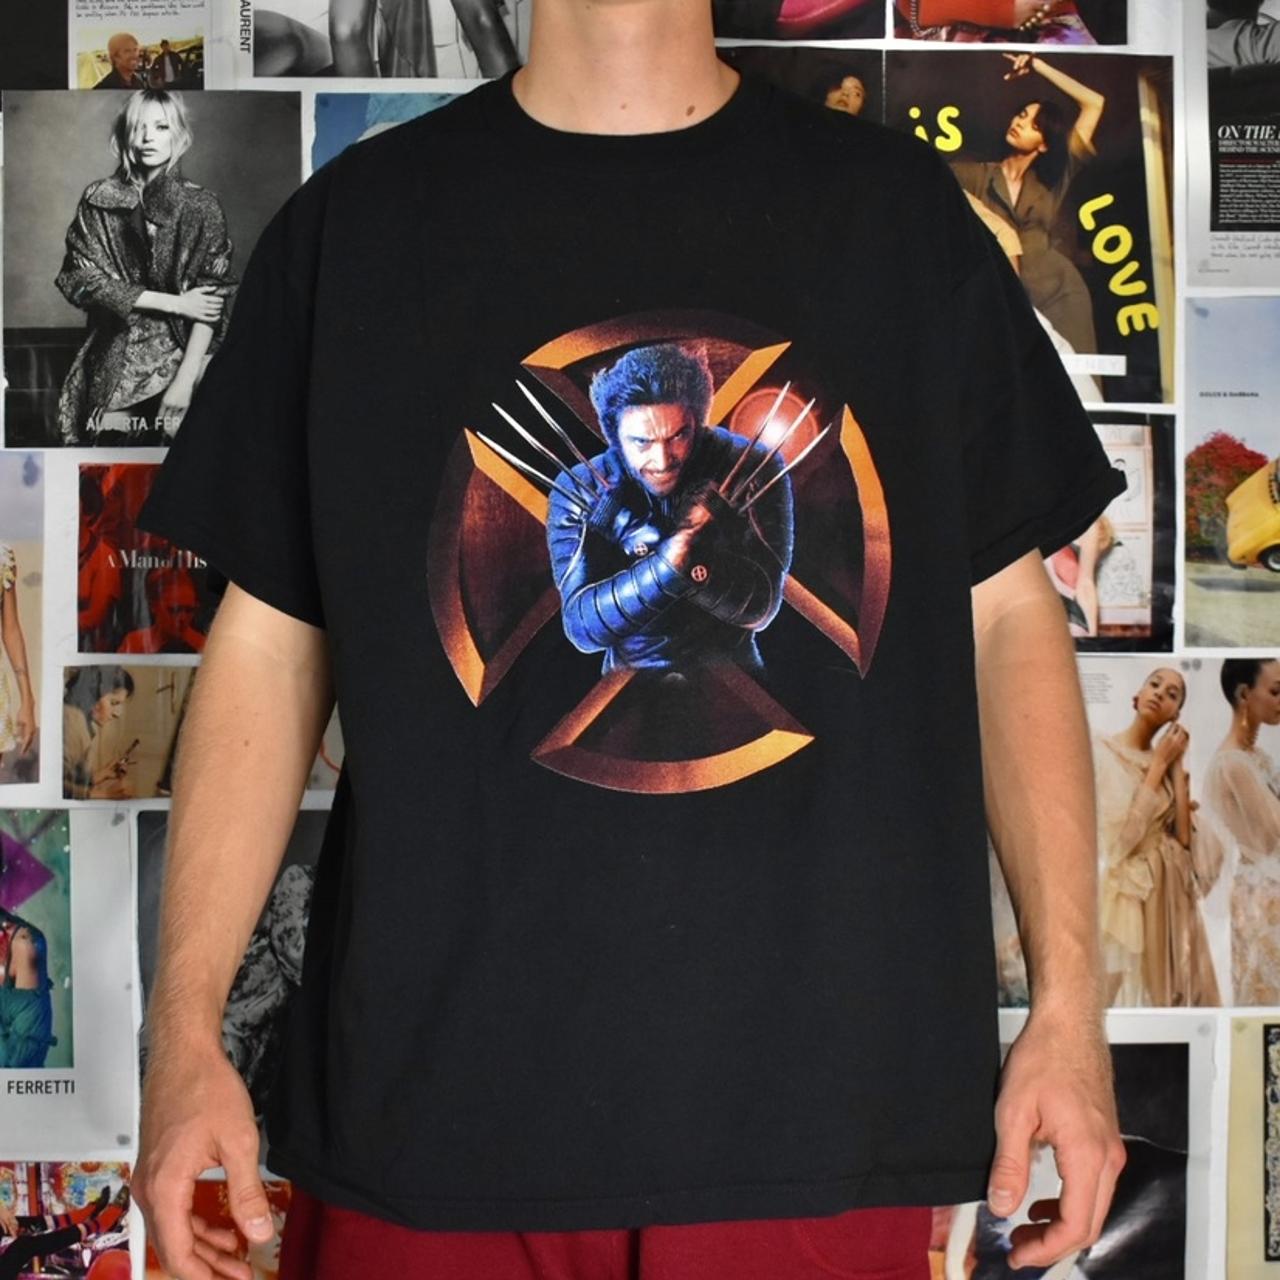 Vintage 2000 Wolverine tee shirt., Movie promo tee...